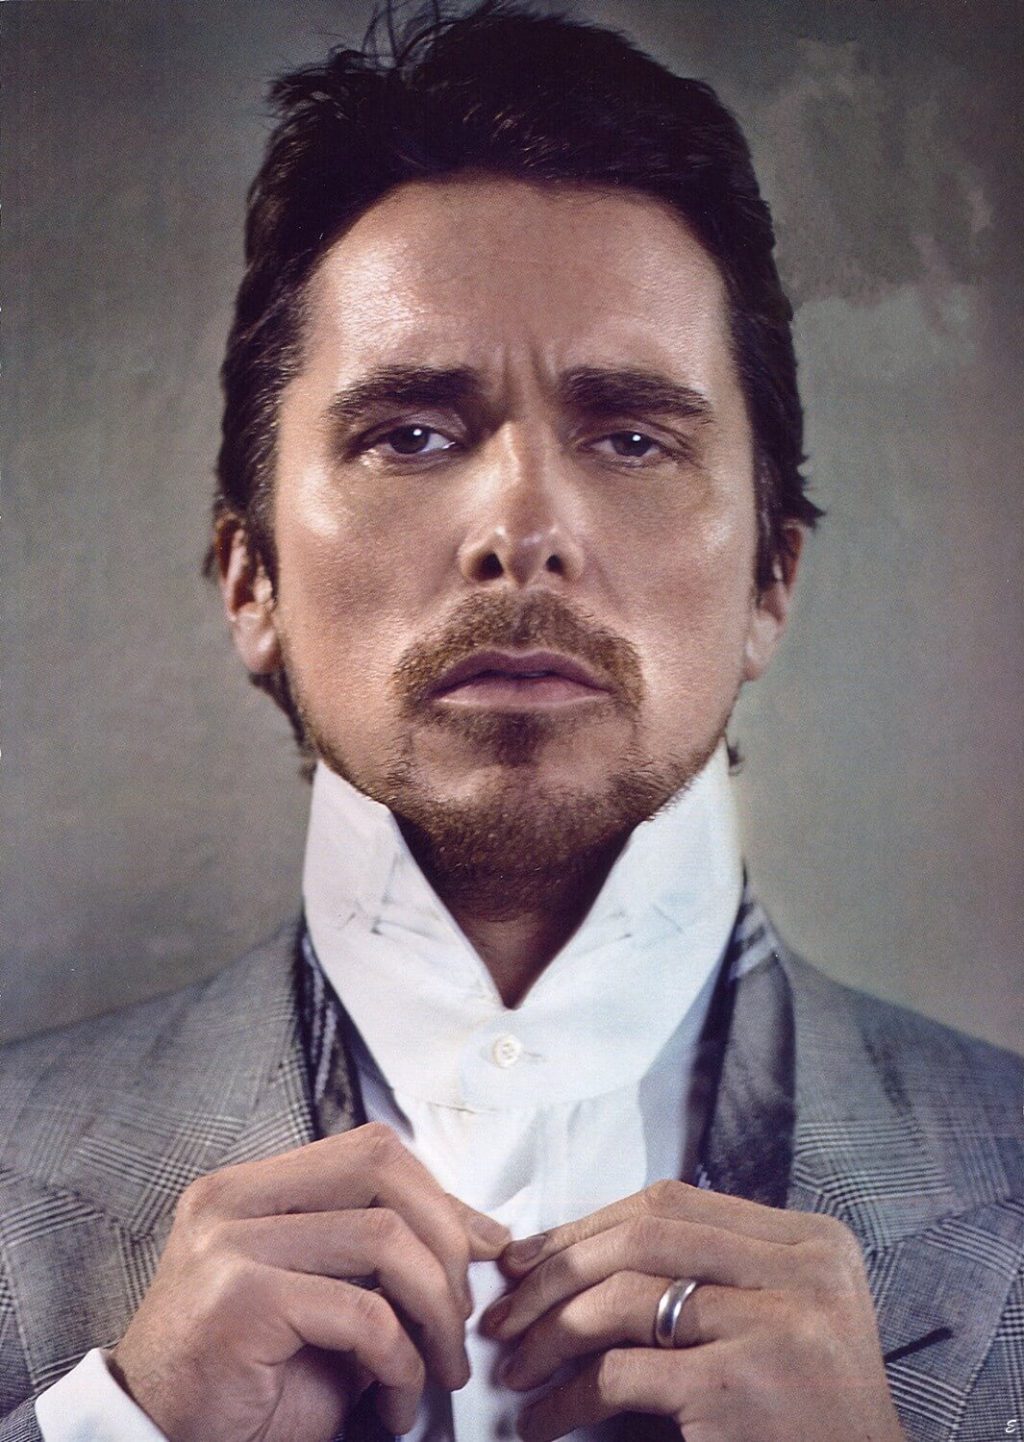 Christian Bale GQ UK August 2008 03